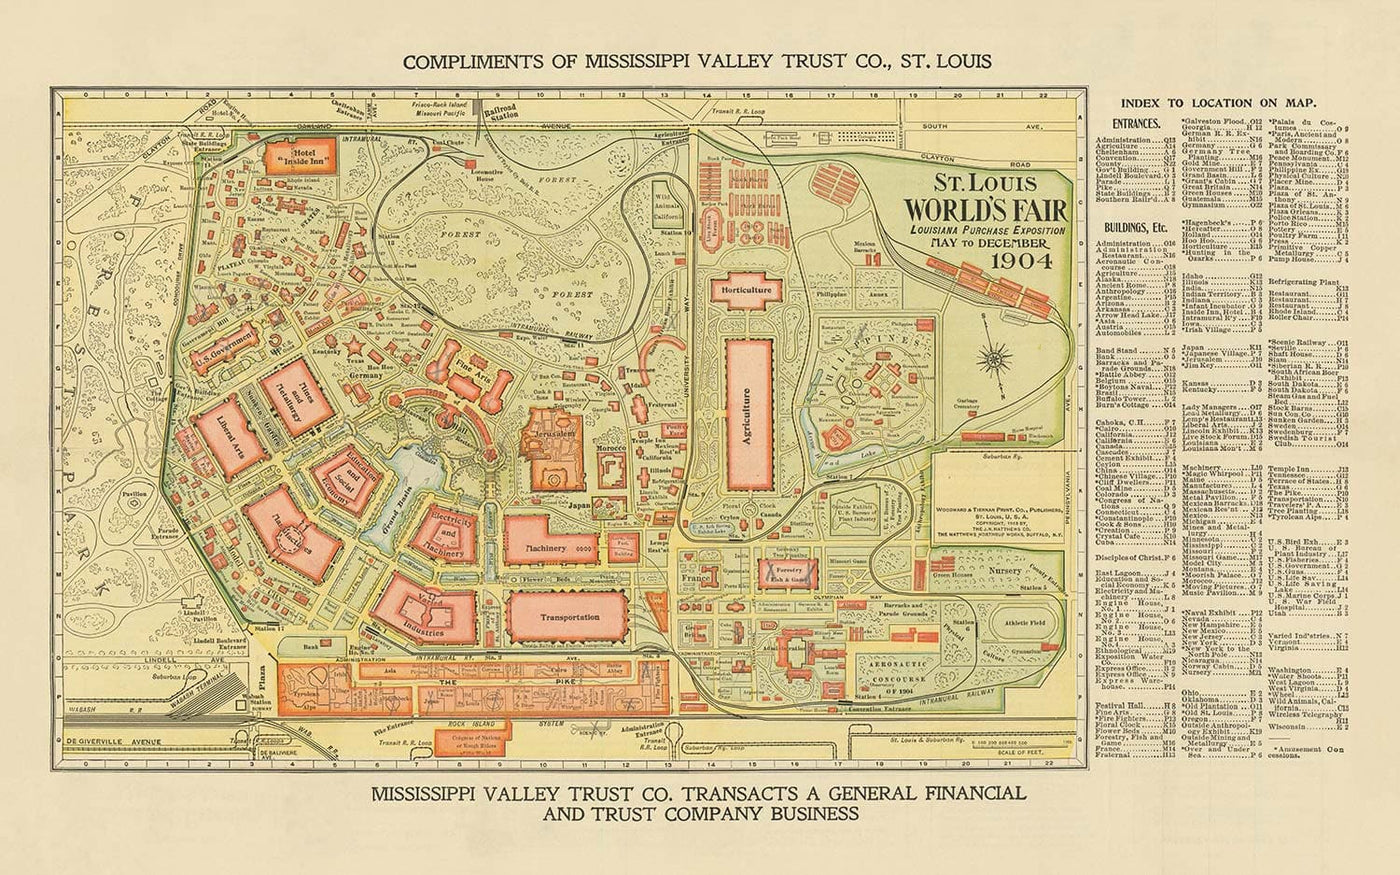 Old Map of St Louis, Missouri, 1904 - World's Fair, Louisiana Purchase Exposition - US History City Chart